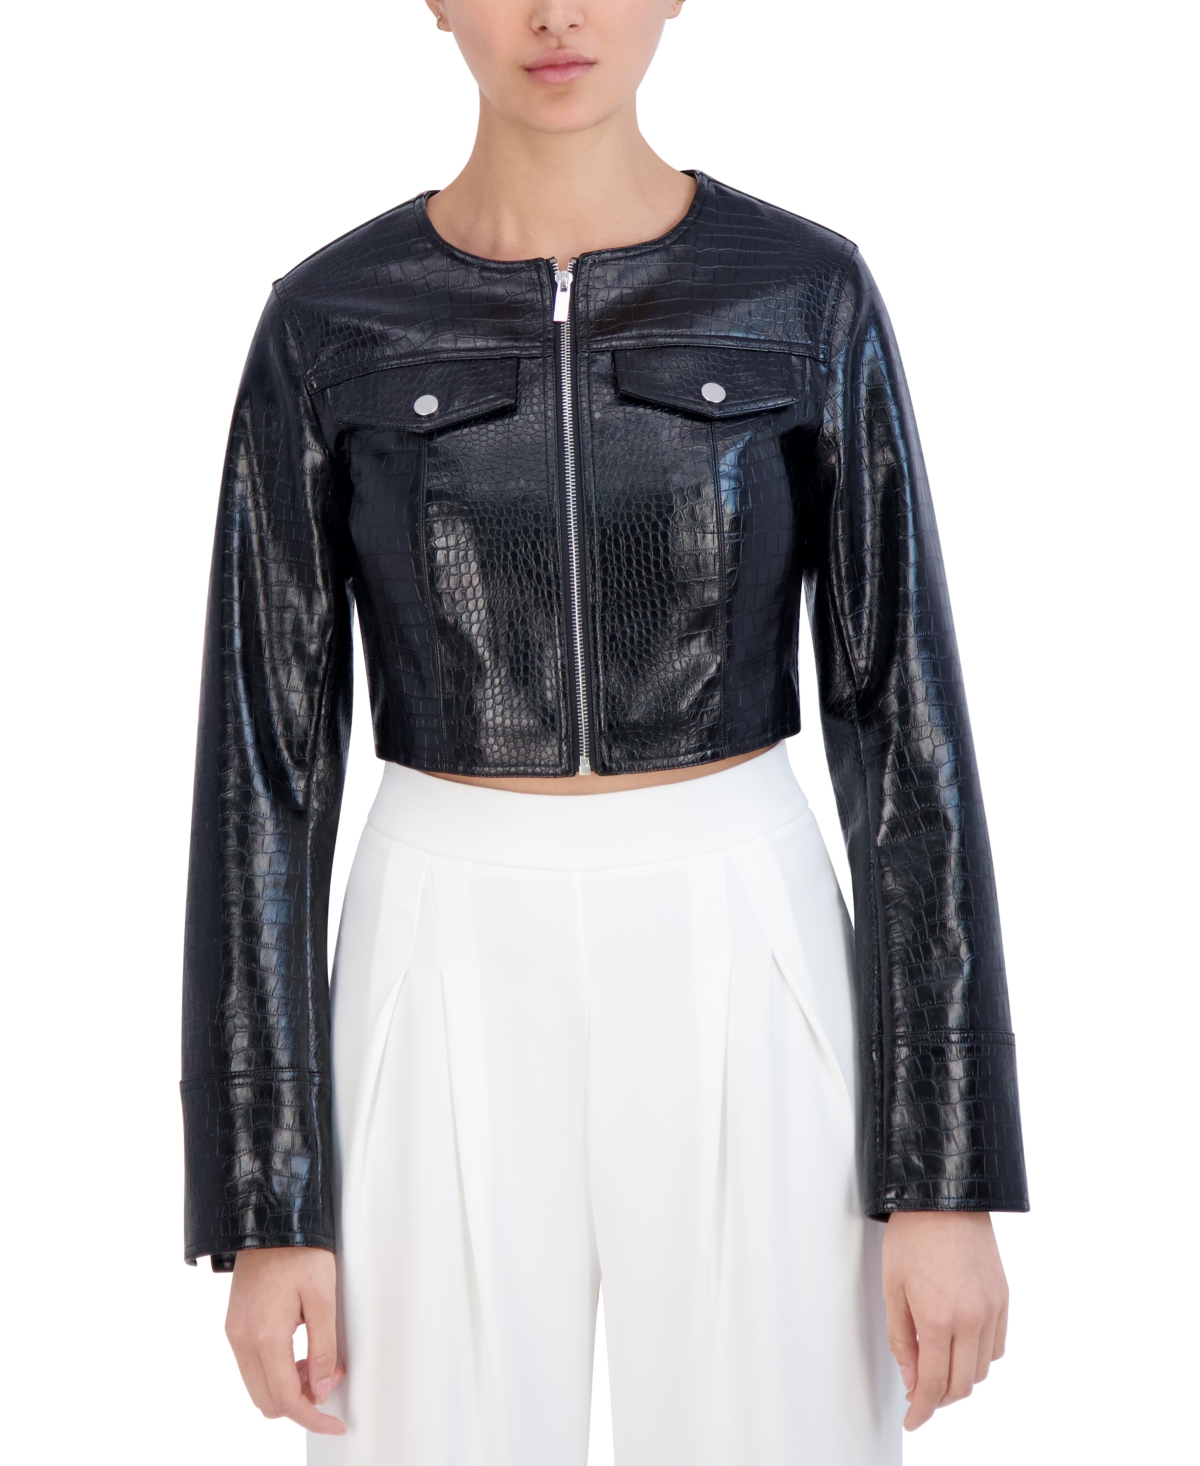 Women's Croc-Print Faux-Leather Cropped Jacket - Onyx